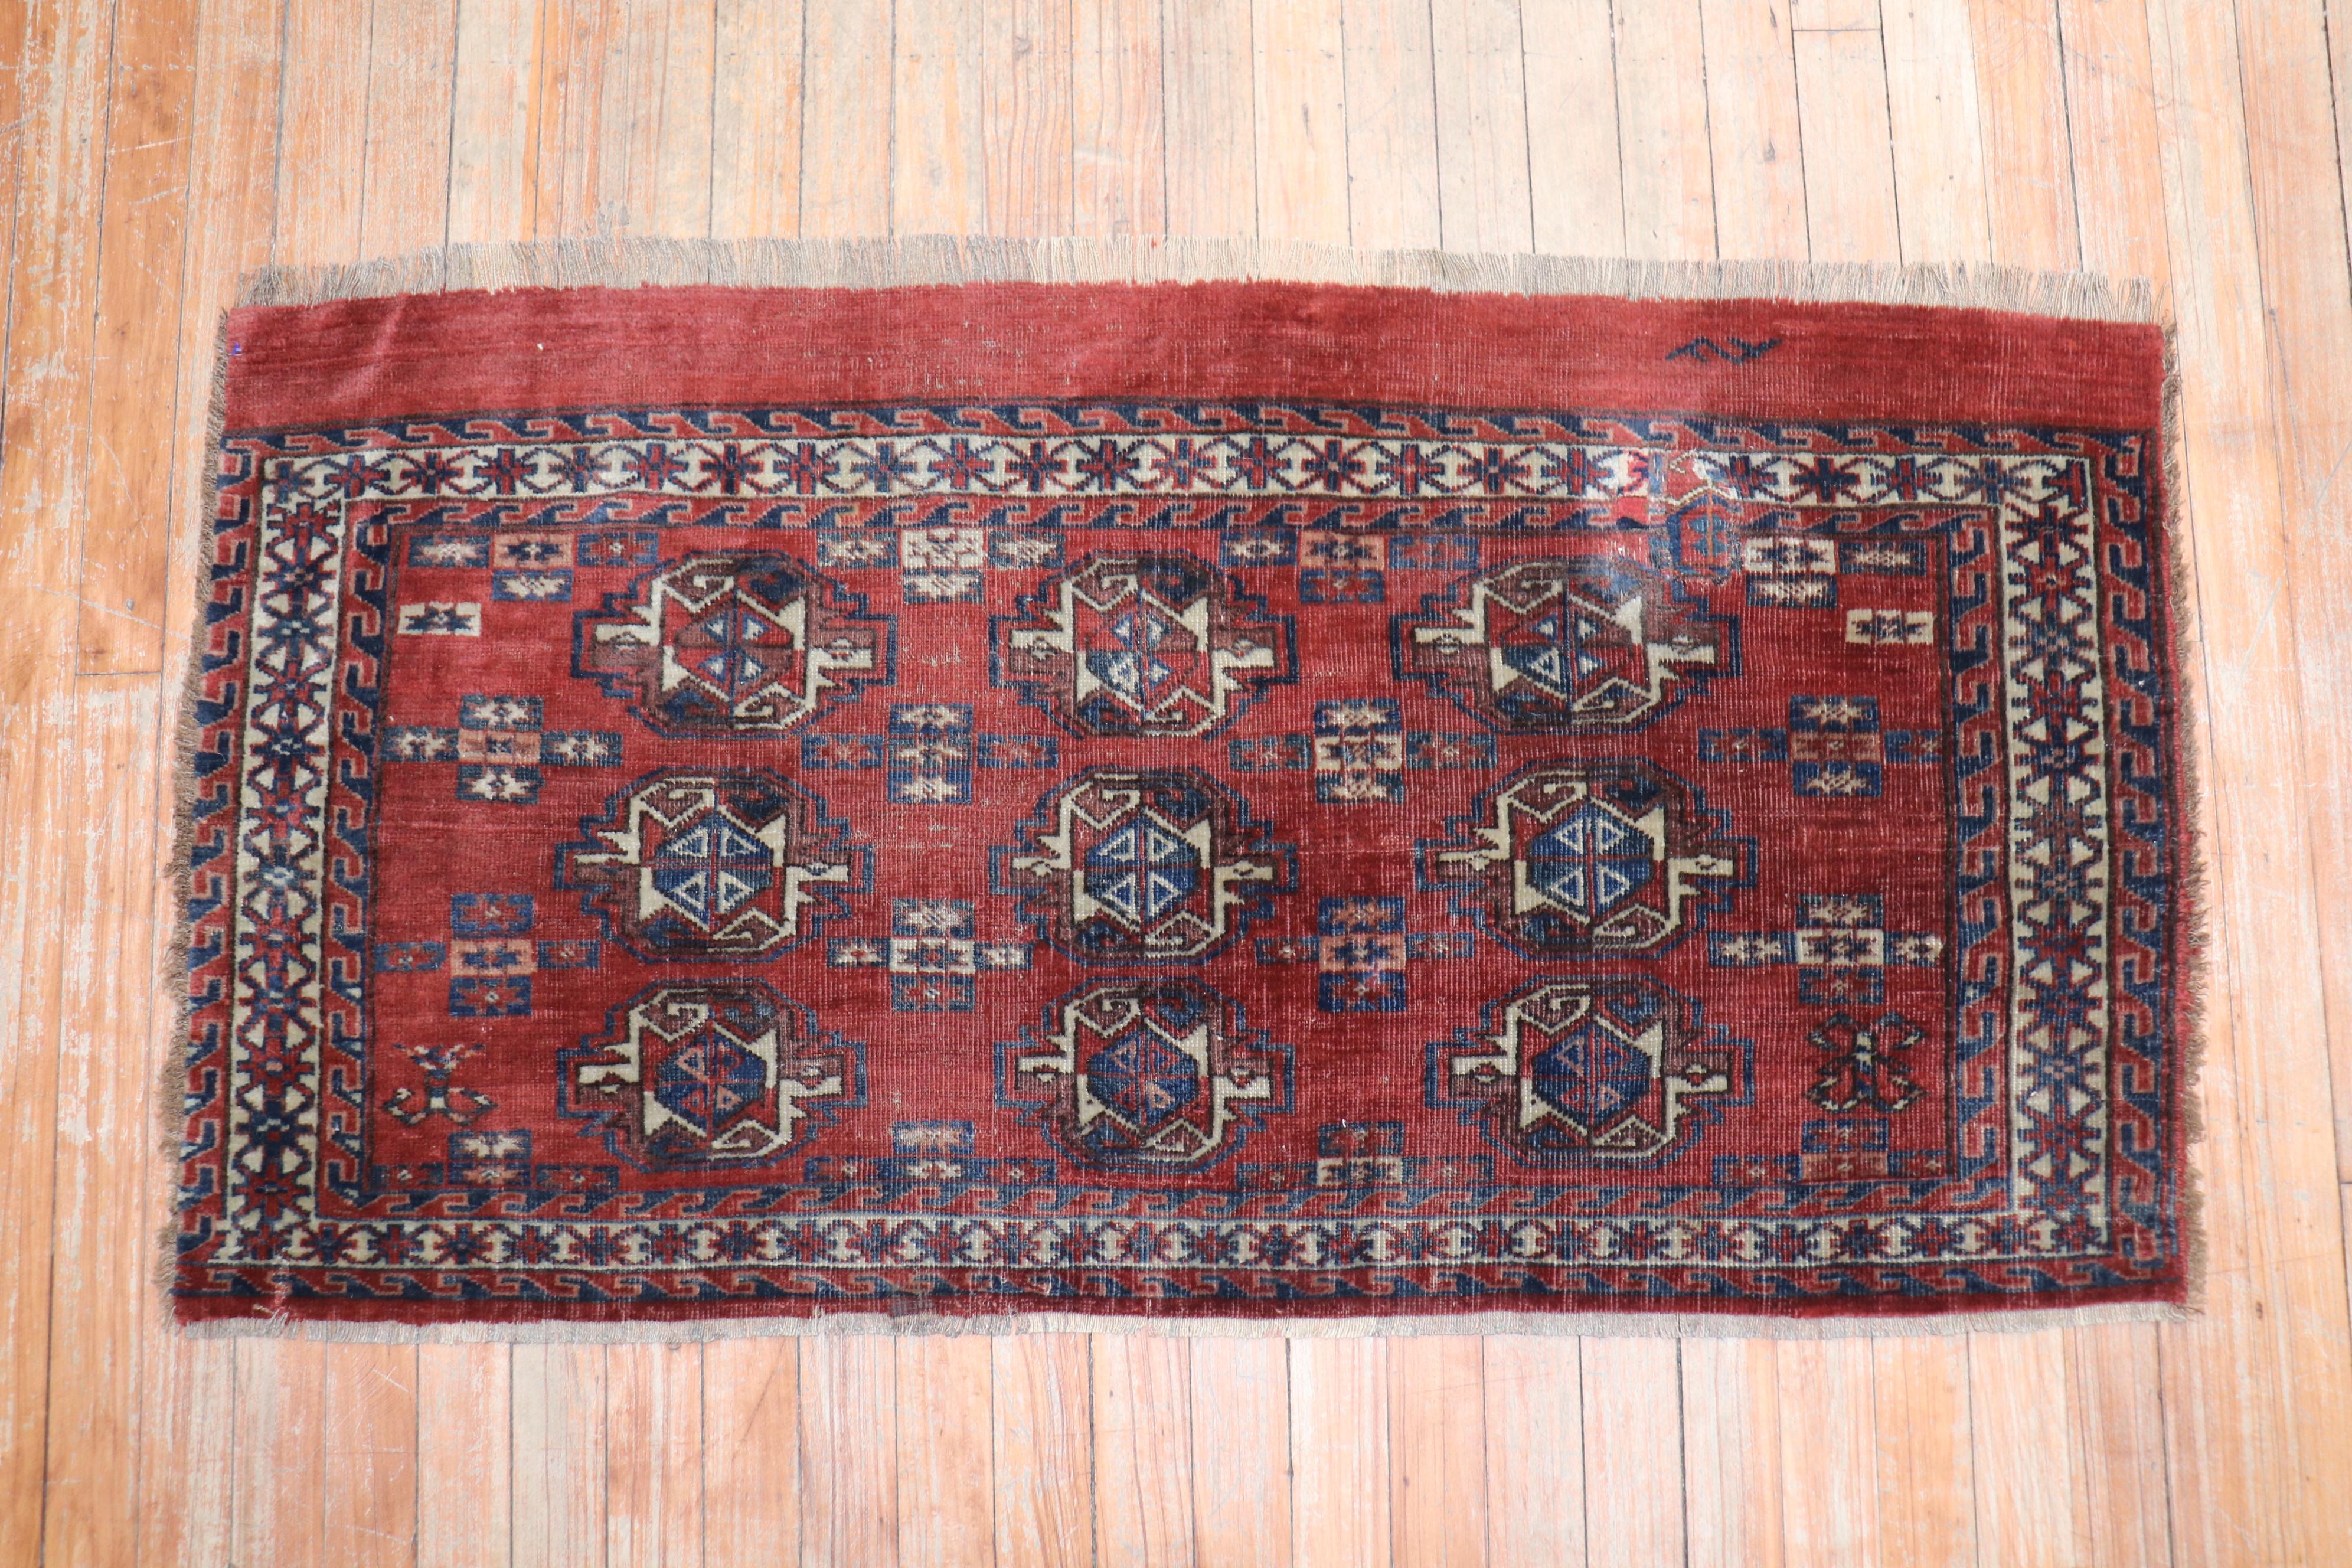 Authentic mid 19th century Turkeman rug

Measures: 24'' x 48''.